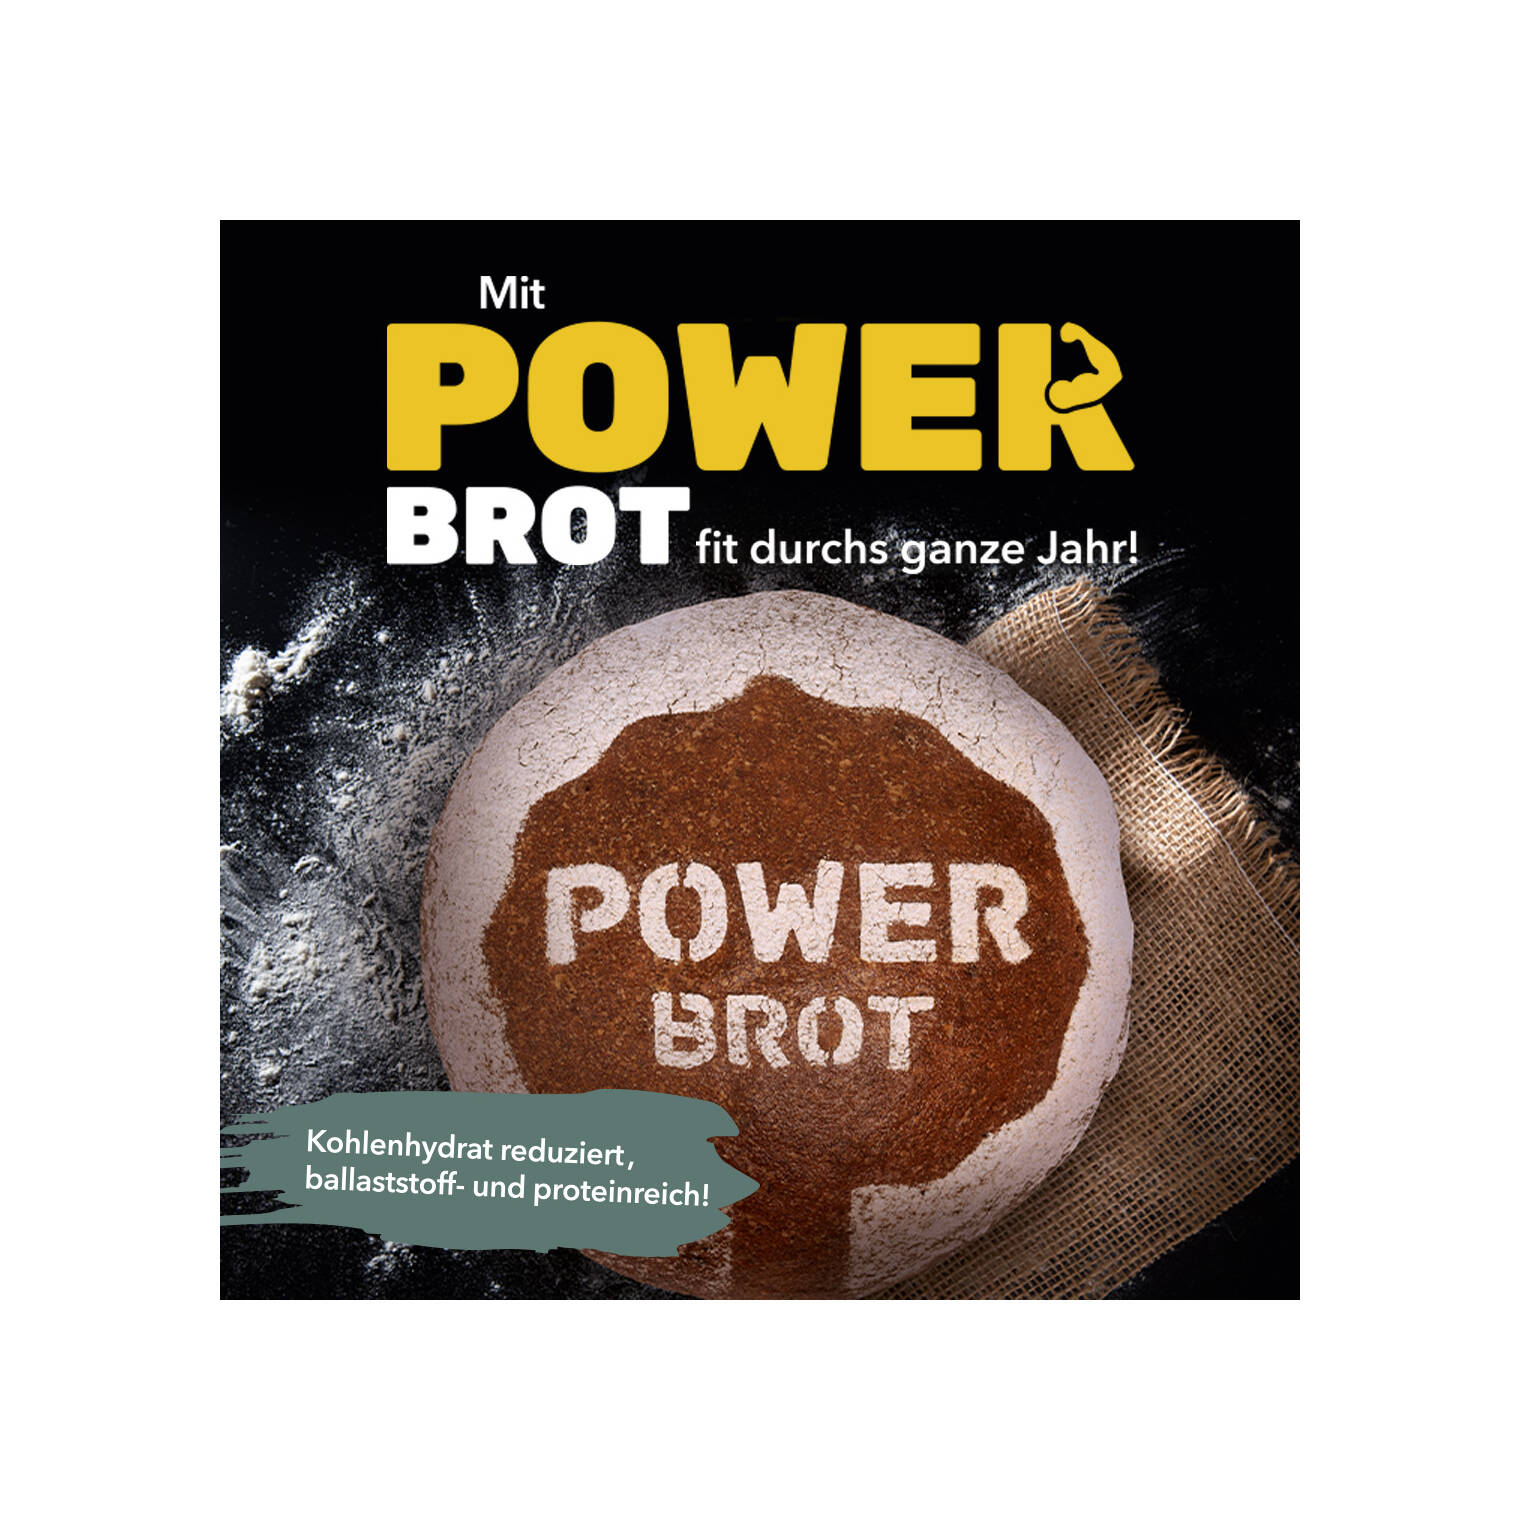 Vorlagen digitale Medien Proteinkruste - Power Brot - B